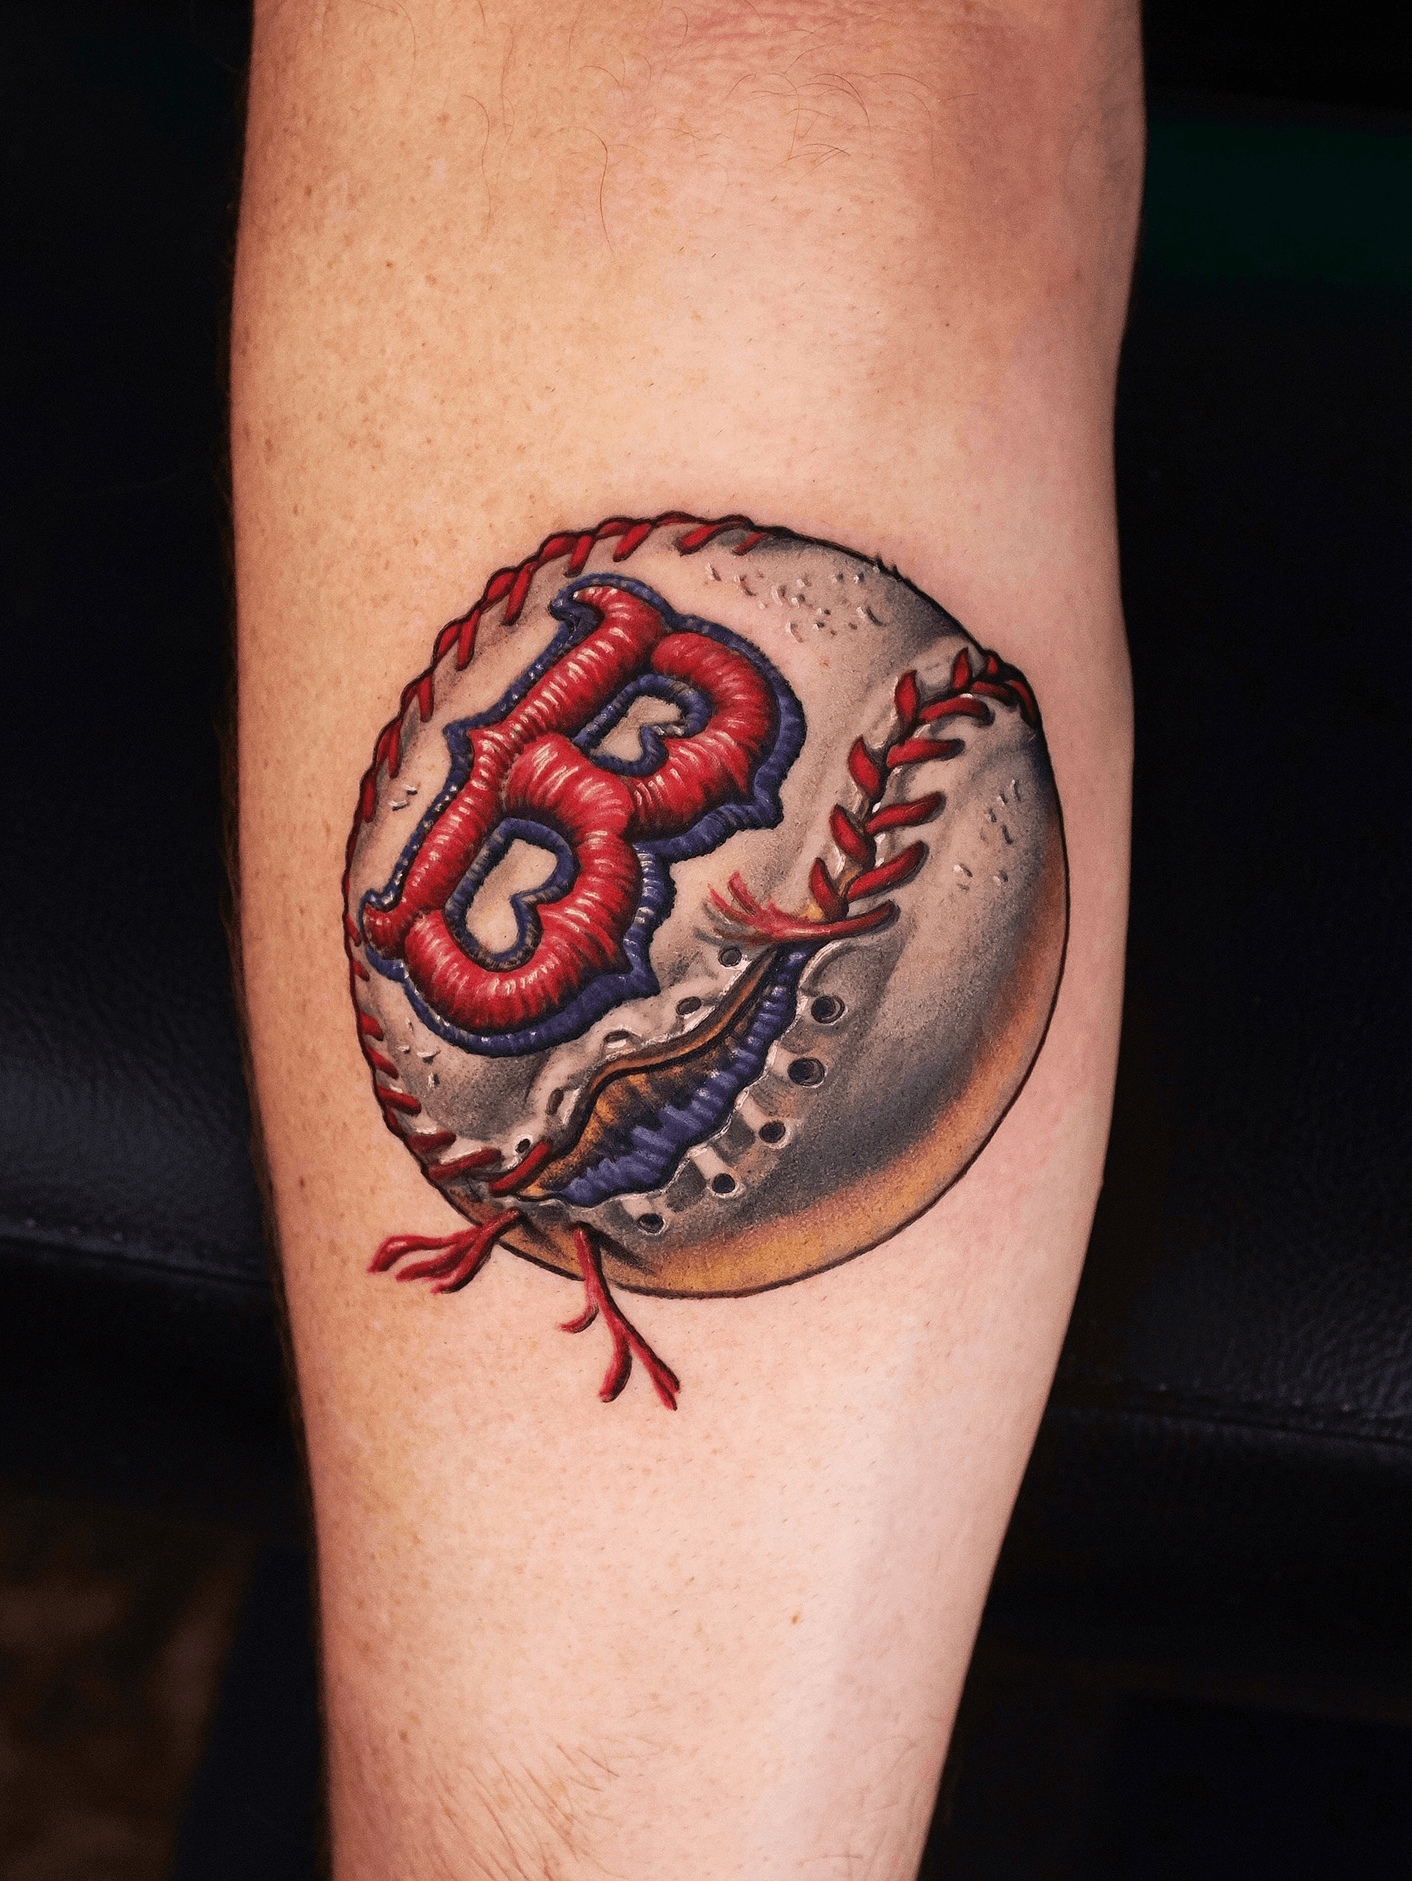 Tattoo uploaded by Camoz • Baseball on forearm. • Tattoodo